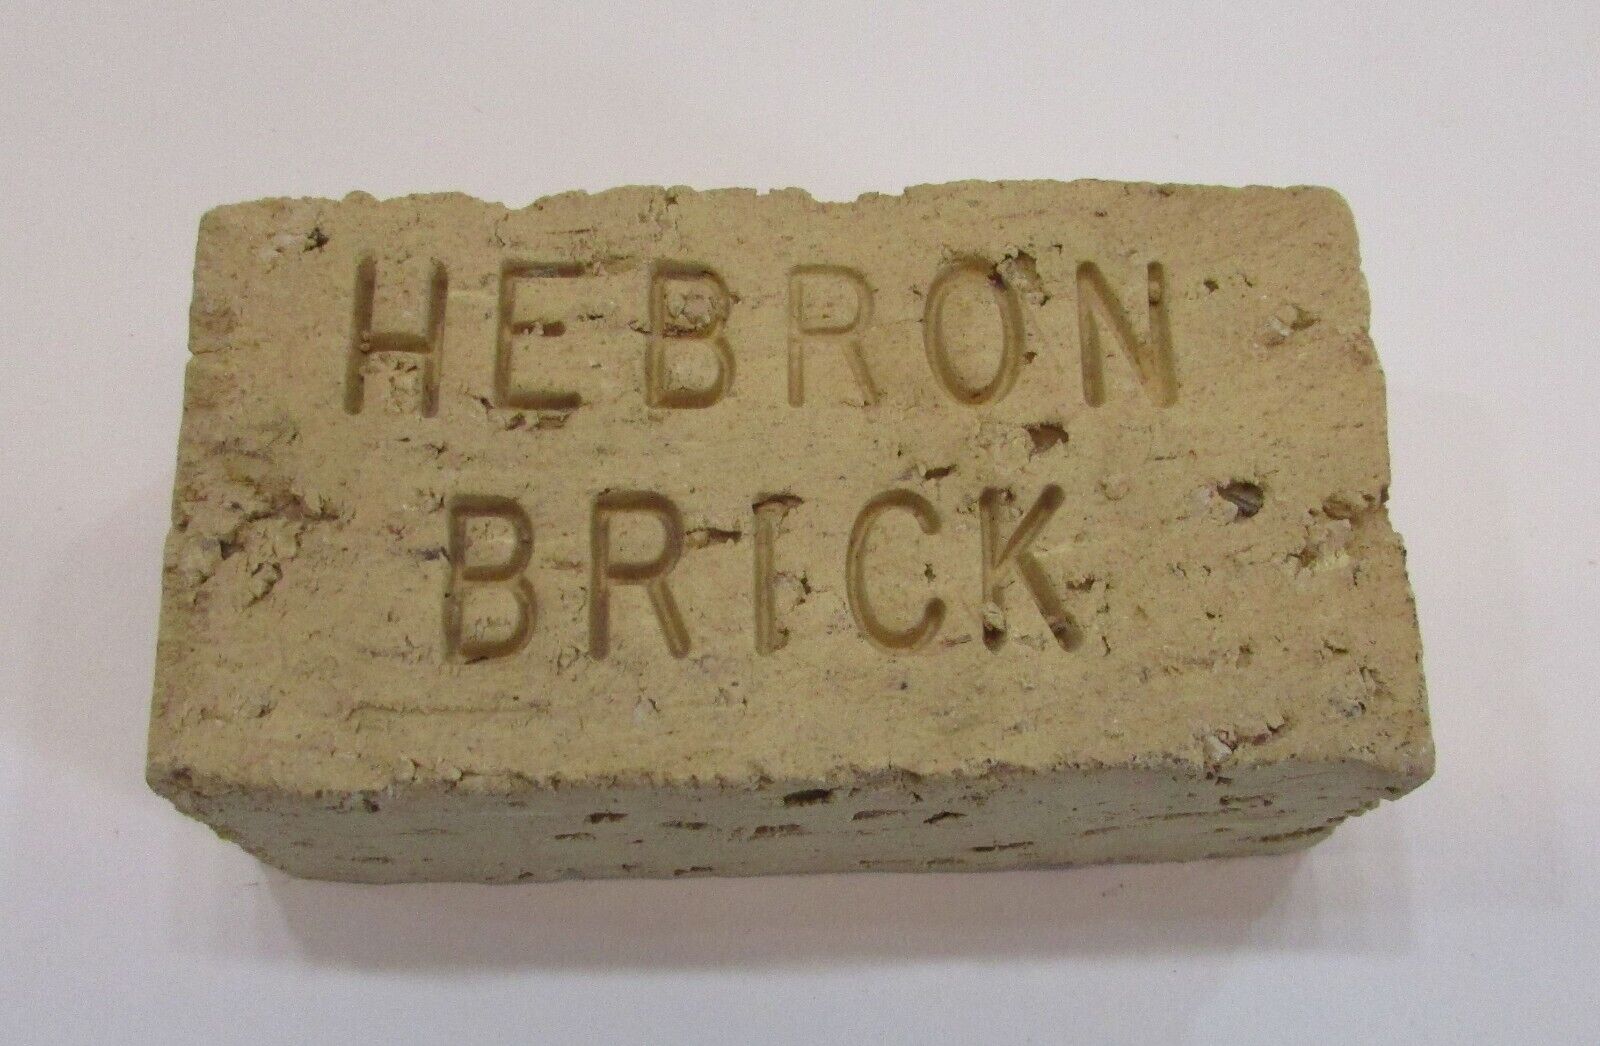 Vintage 1950's Hebron ND Brick North Dakota Souvenir 1x2x4 Paperweight FREE S/H